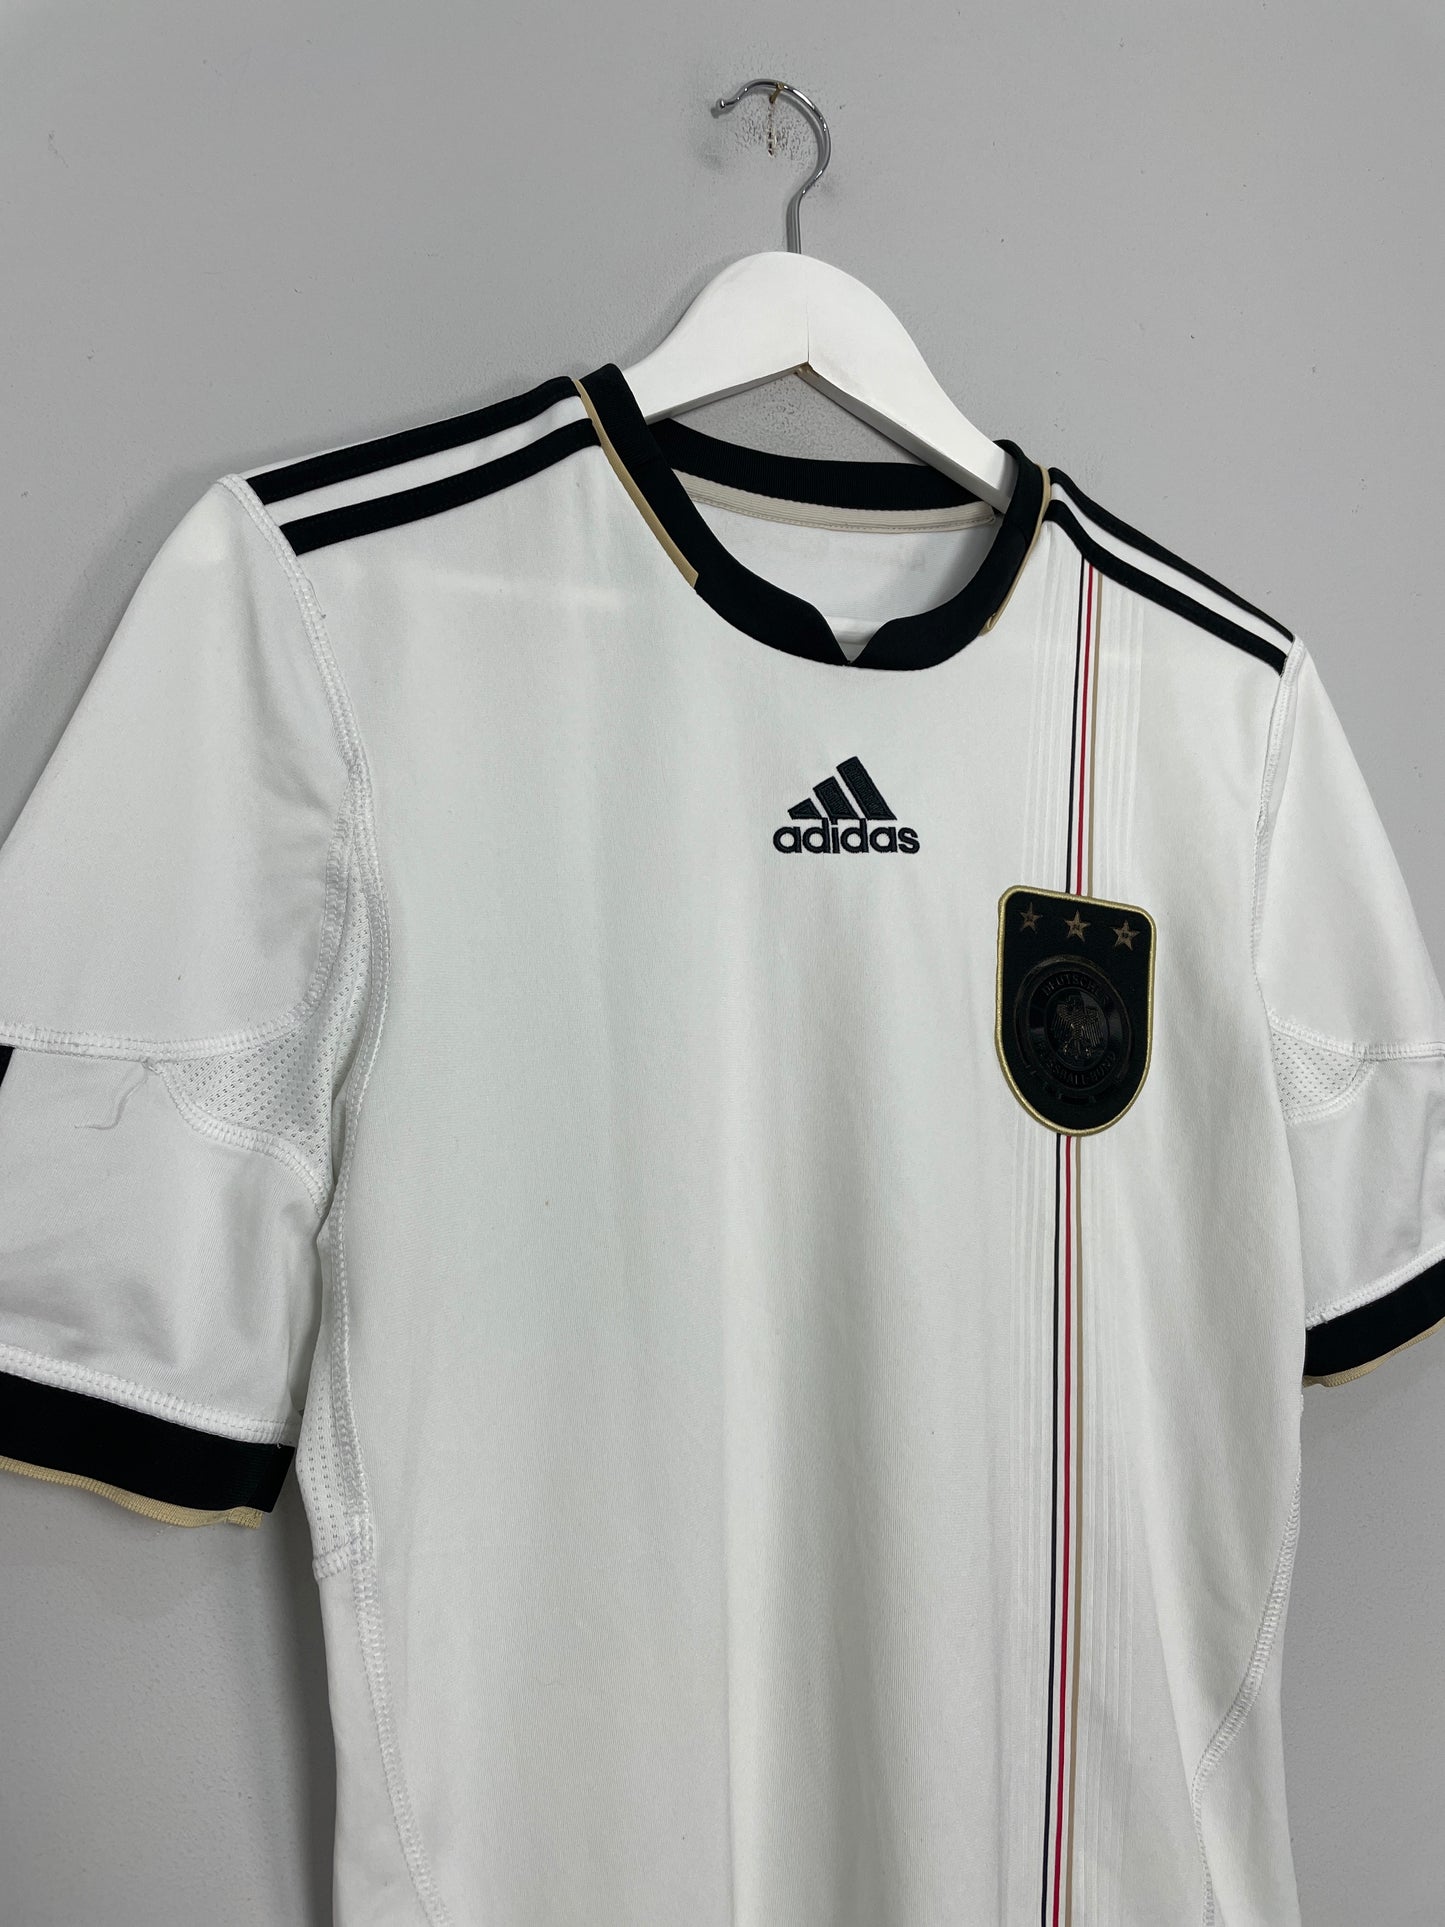 Classic Germany Football Shirt